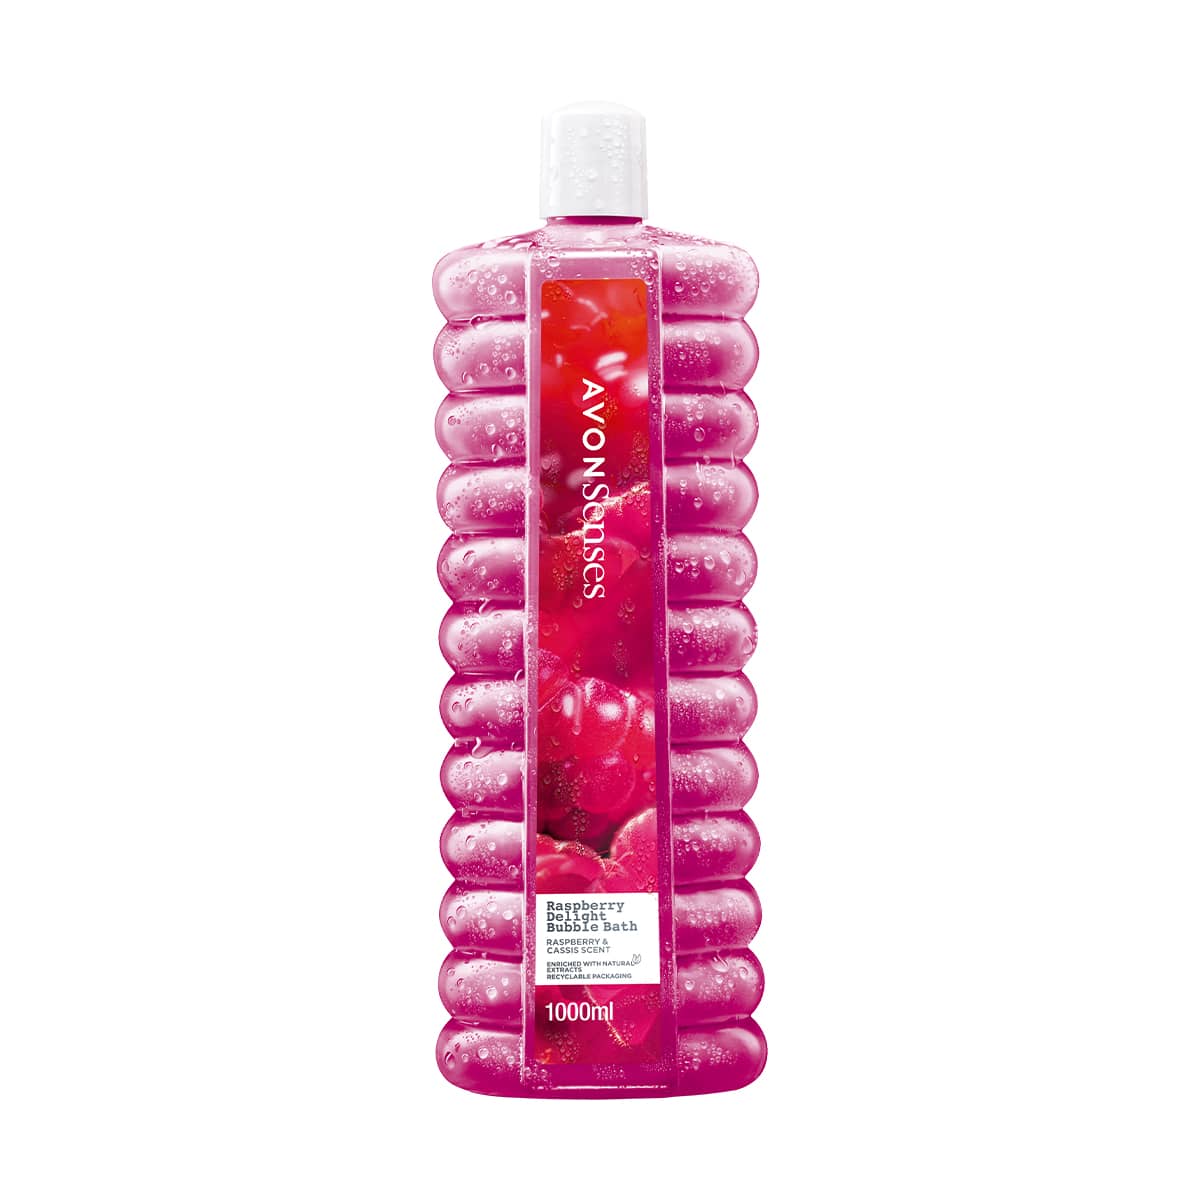 Avon Raspberry Delight Bubble Bath - 1 Litre